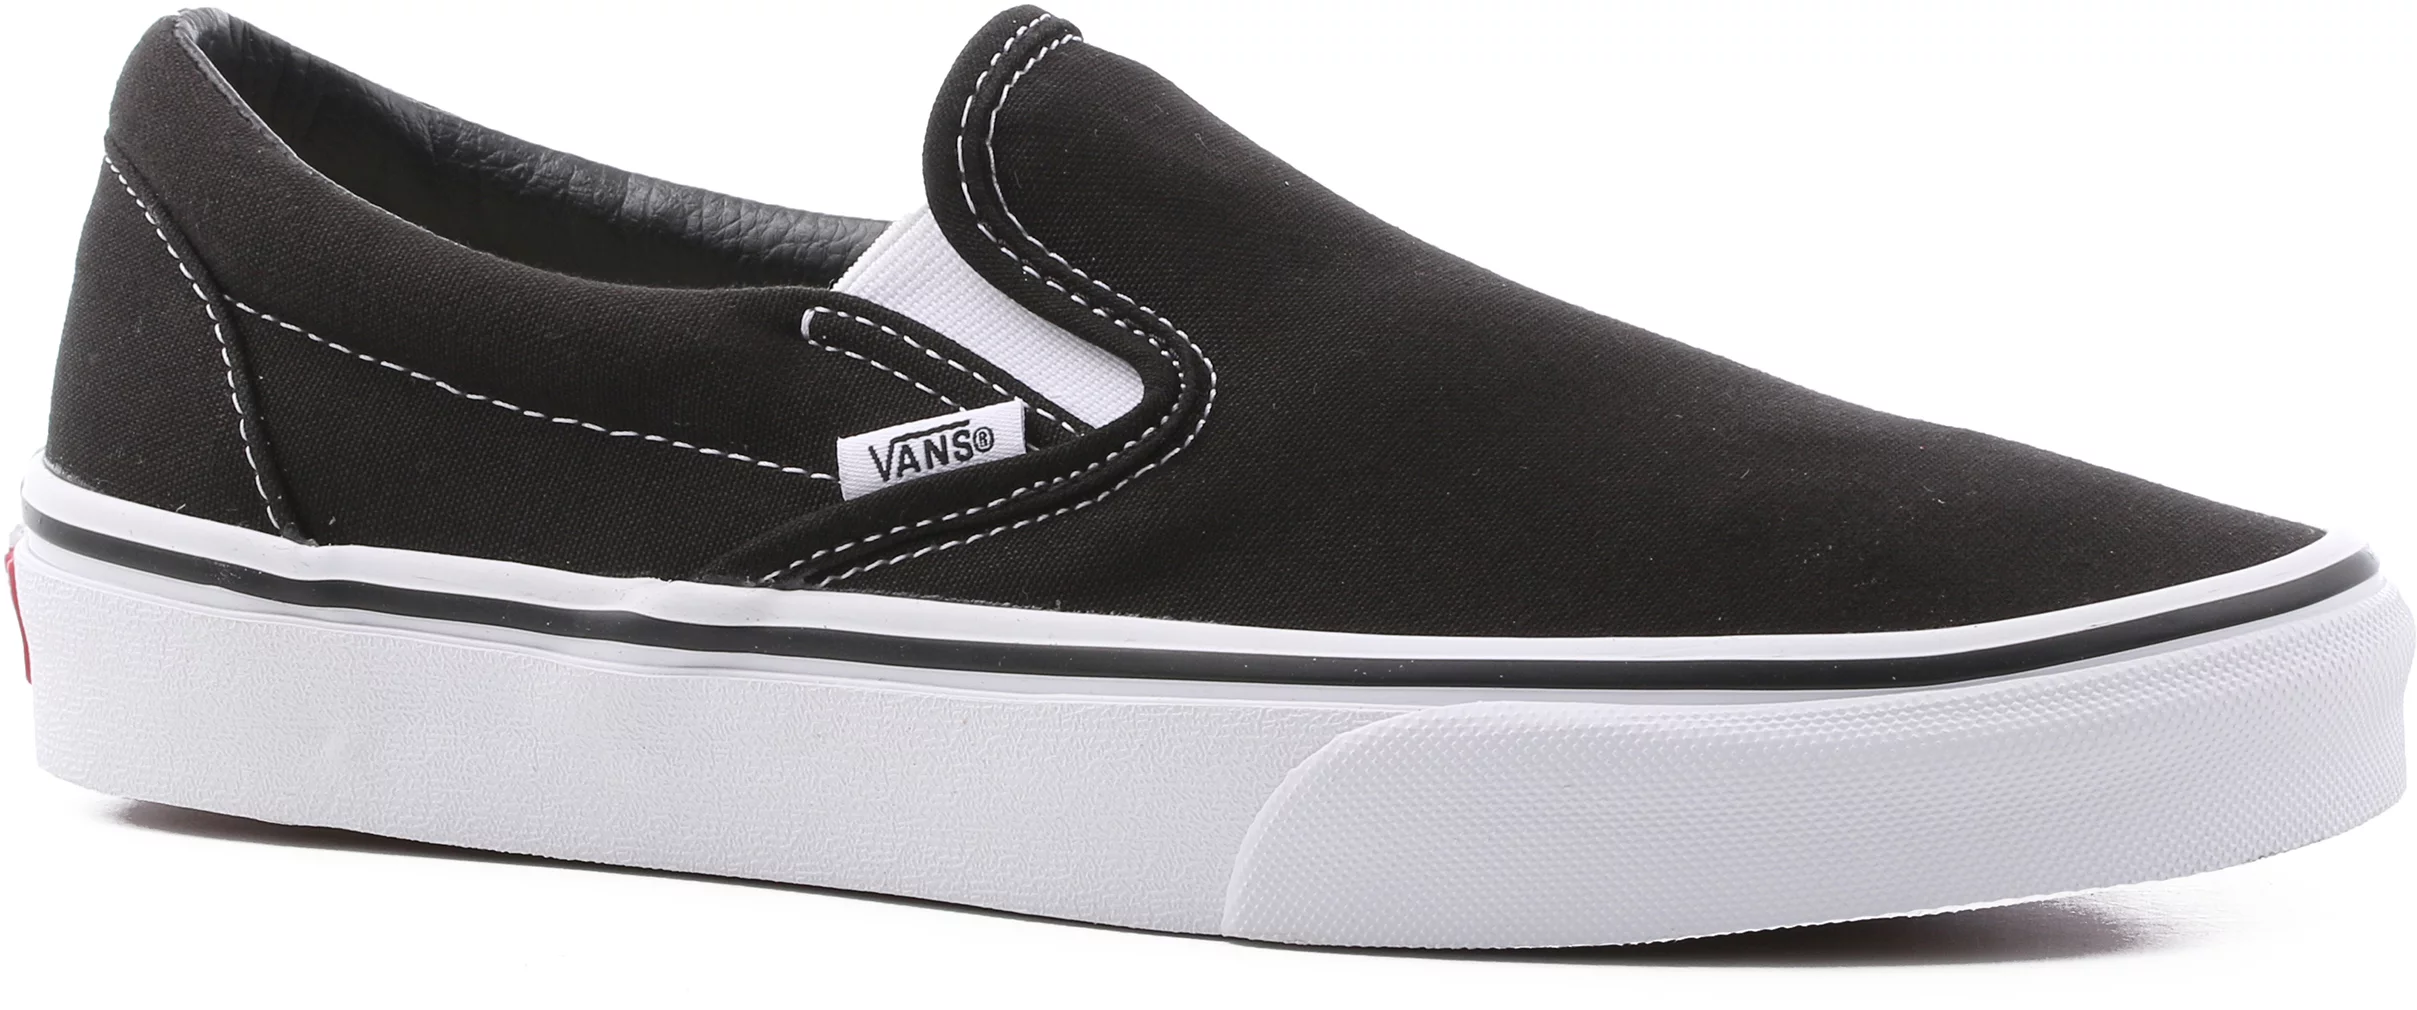 Vans Women's Classic Slip-On Shoes - black | Tactics